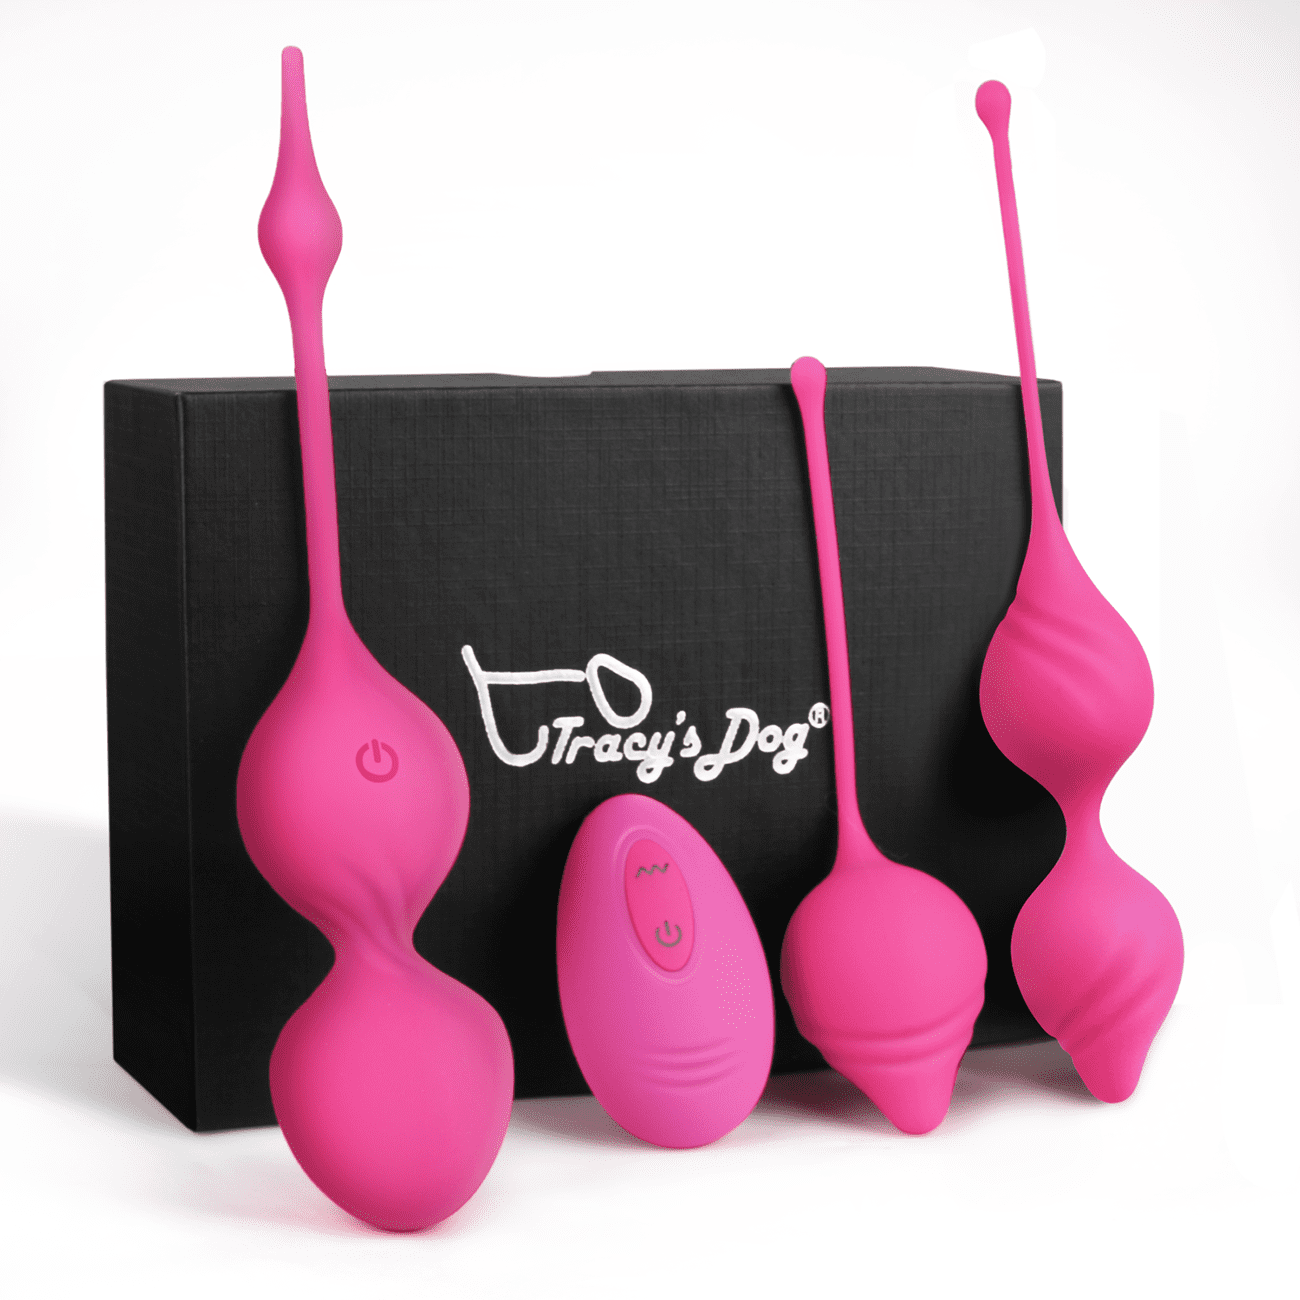 Tracys Dog Kegel Balls for Women, Vibrating Eggs Love Ben Wa Balls Adult Sex Toys Bullet Vibrator with 10 Vibration for G-Spot Stimulation, Set of 3  image